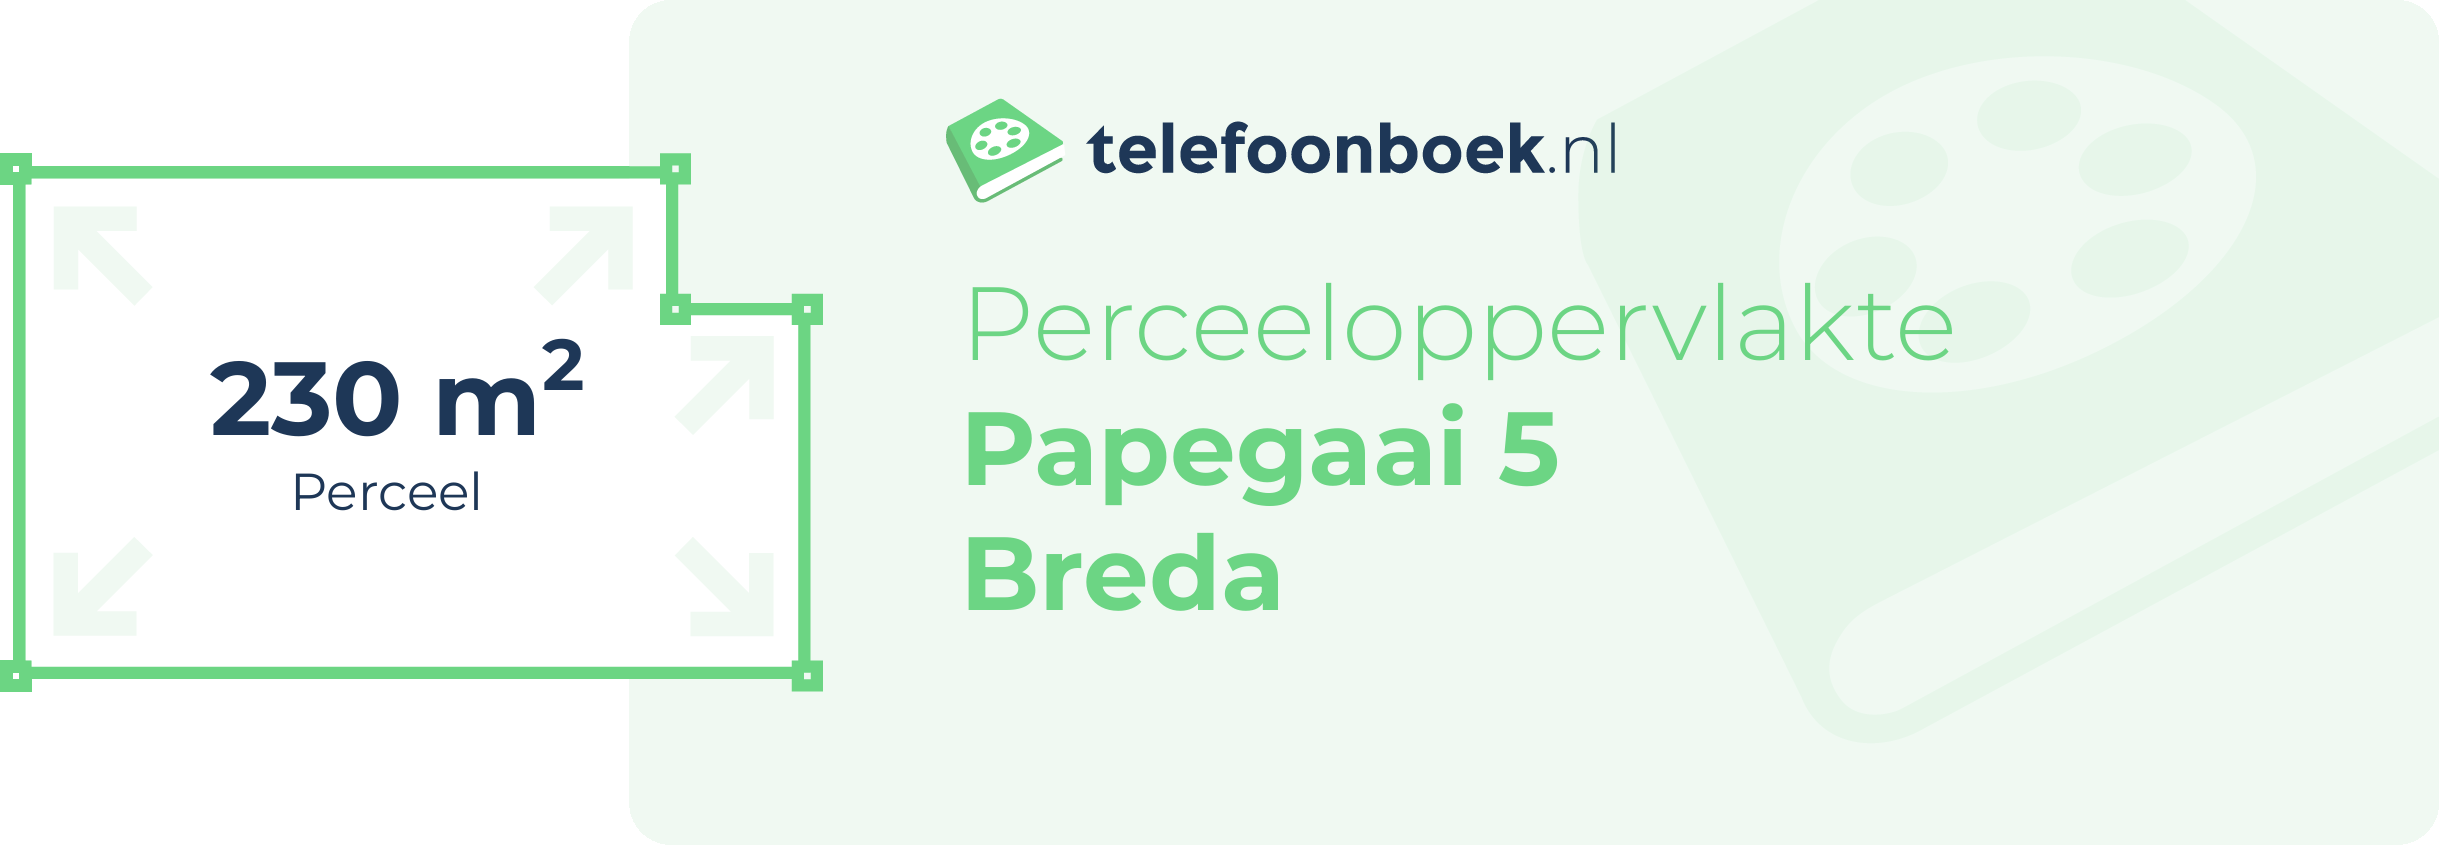 Perceeloppervlakte Papegaai 5 Breda